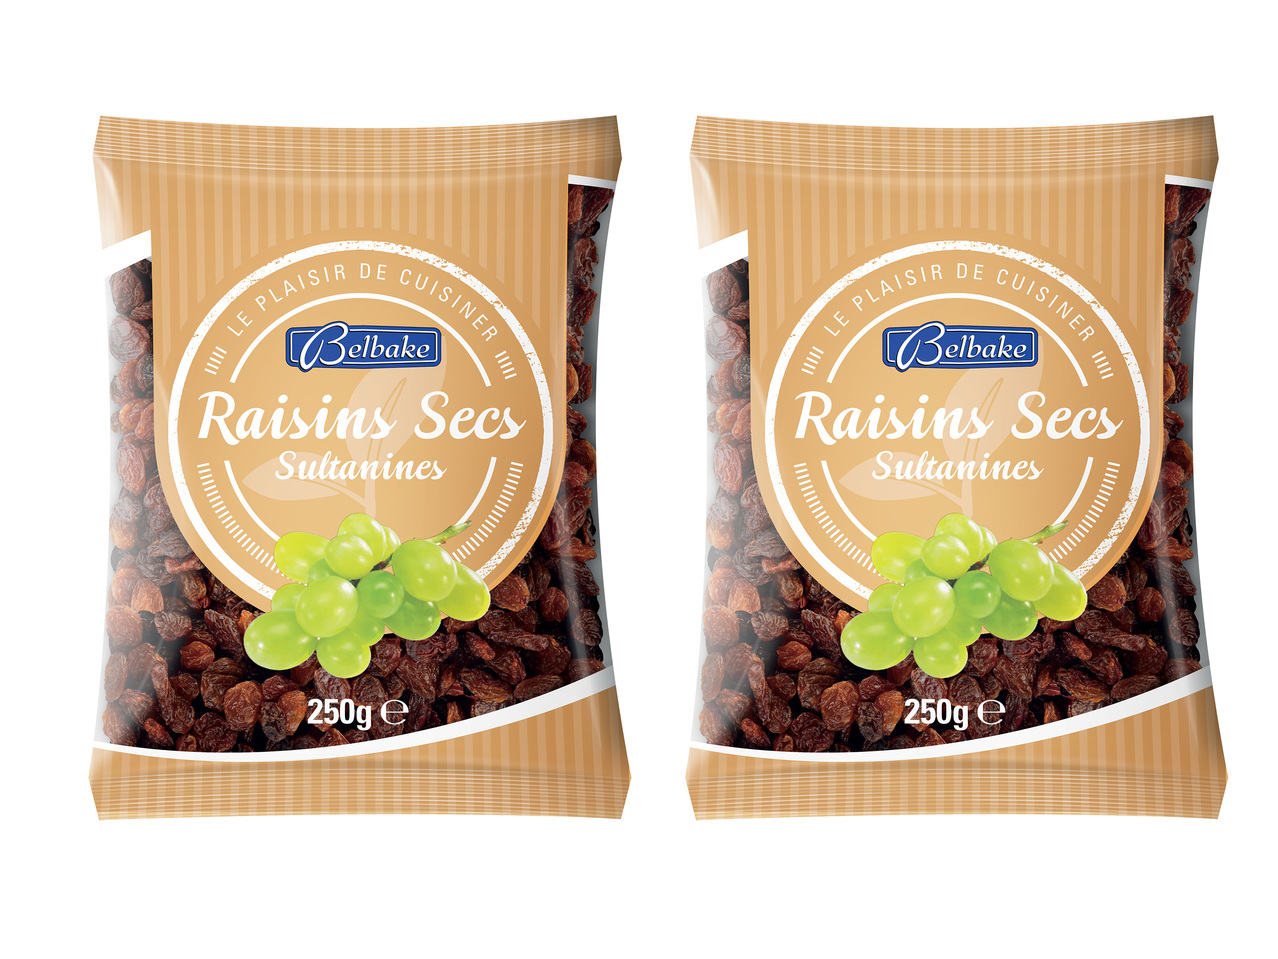 Raisins secs1